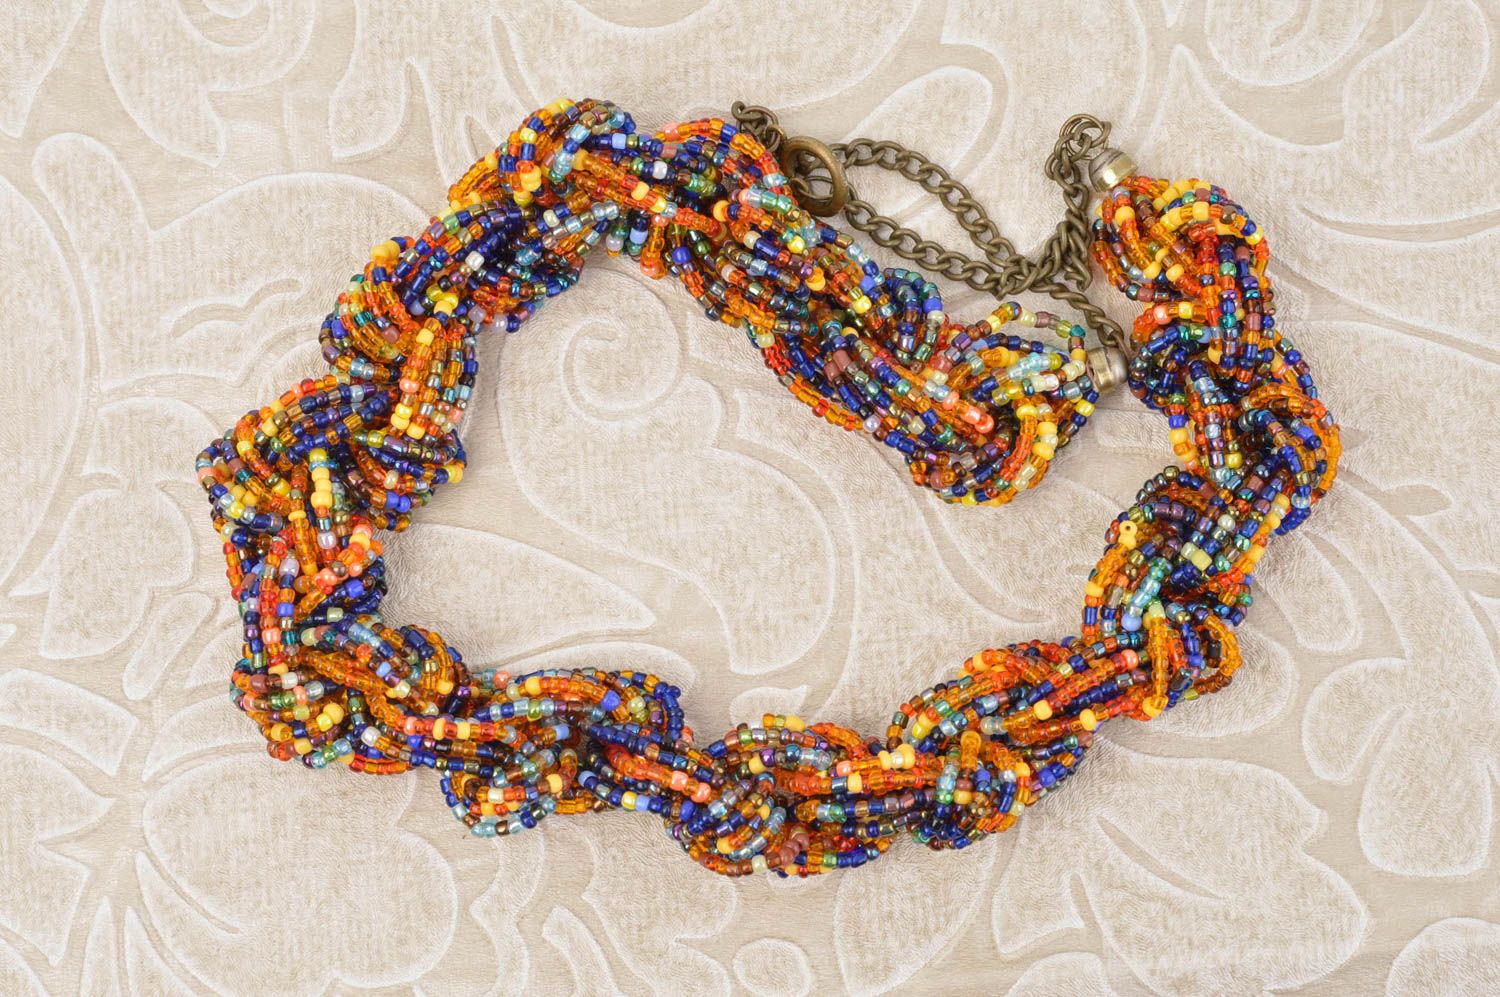 Handmade necklace bead necklace designer accessory beautiful jewelry gift ideas photo 1